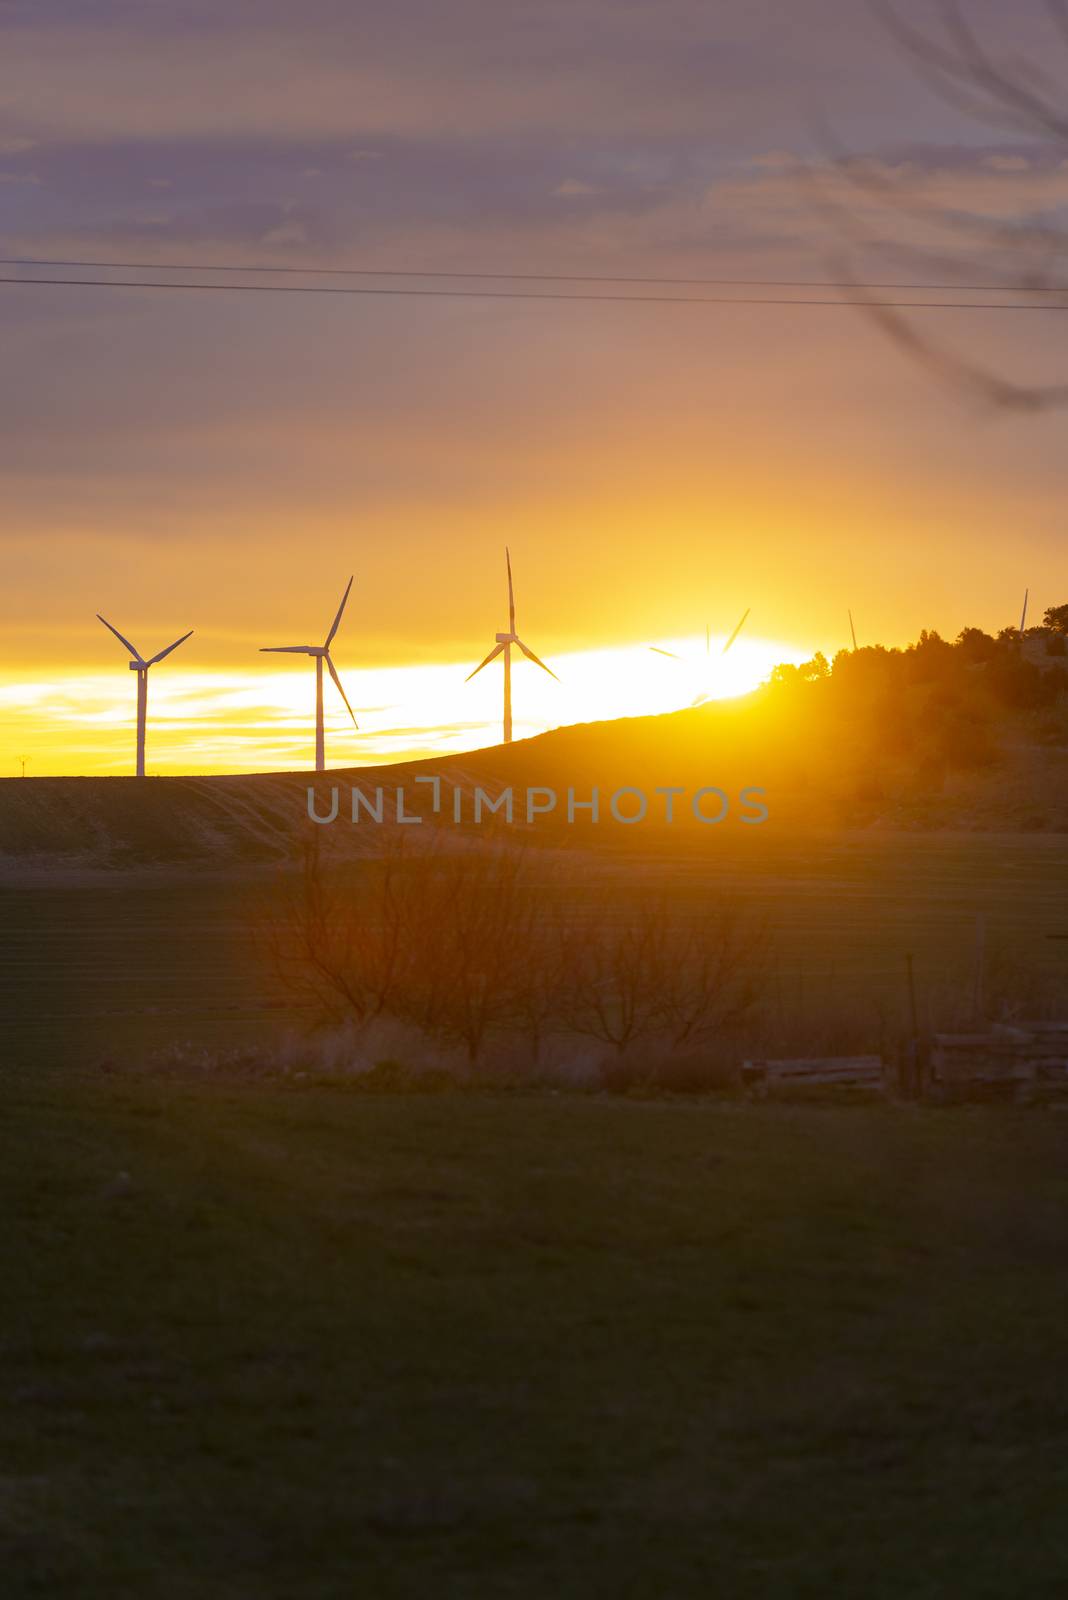 Wind Turbines in field against sunset sky, Spain